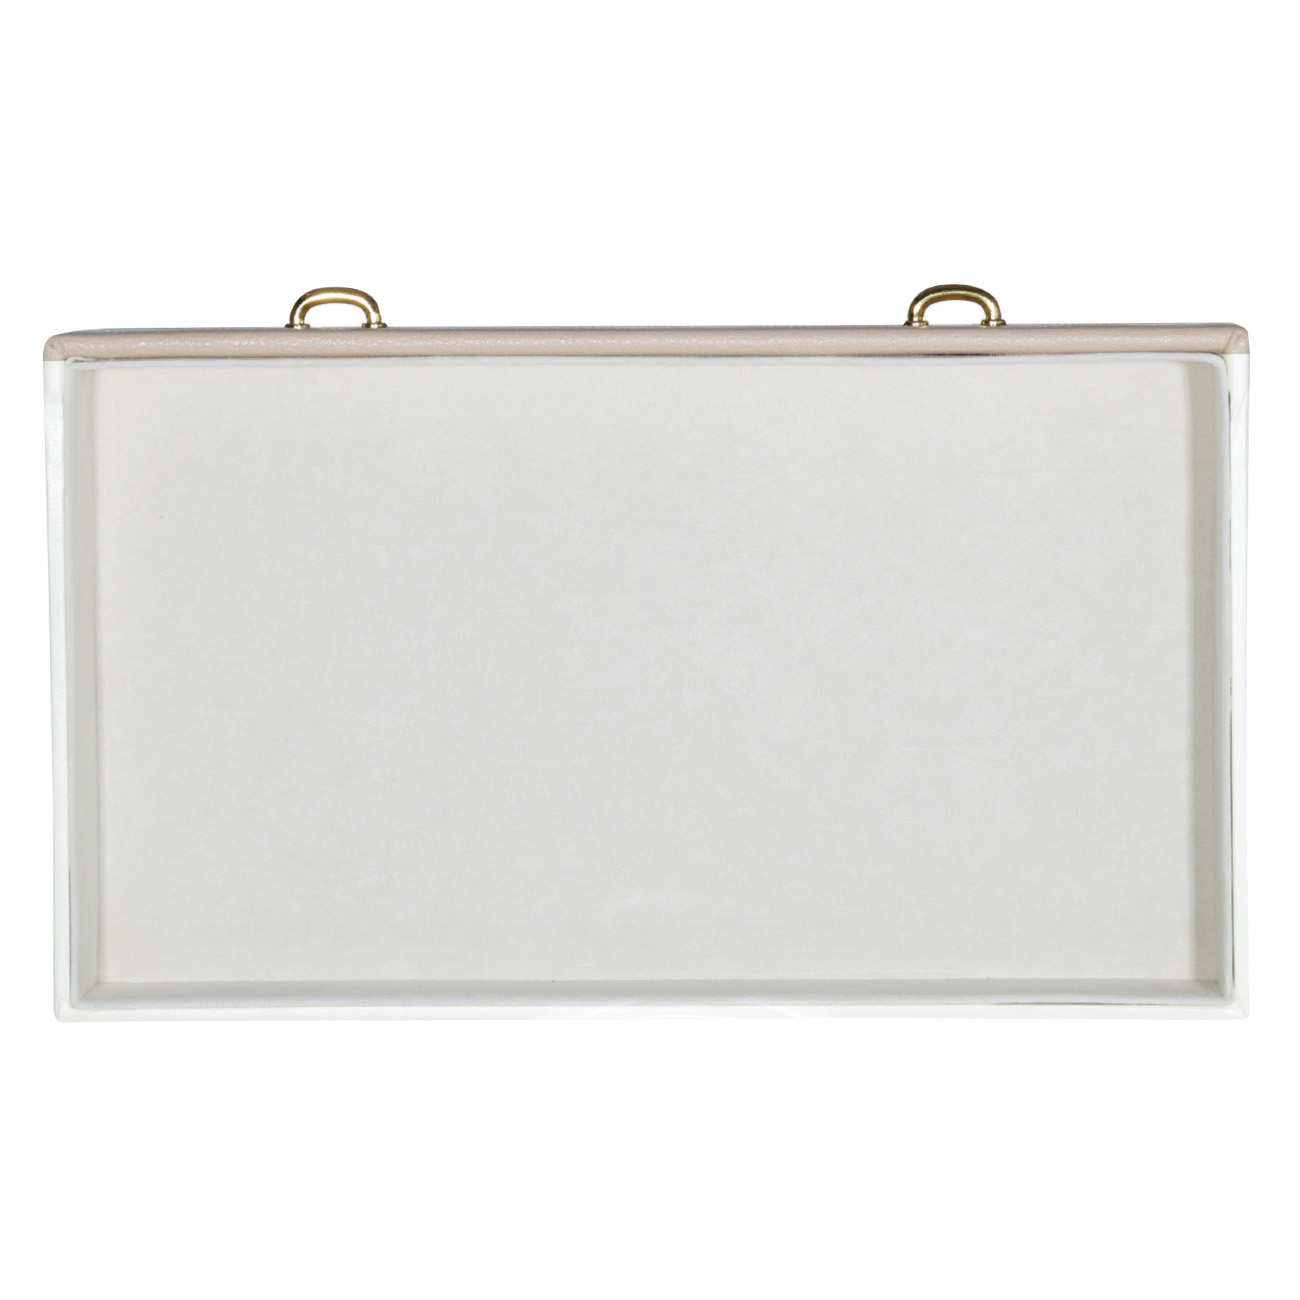 Jewelry box, 26x15 cm, with mirror, wood/PU leather, beige, Premiere изображение № 5